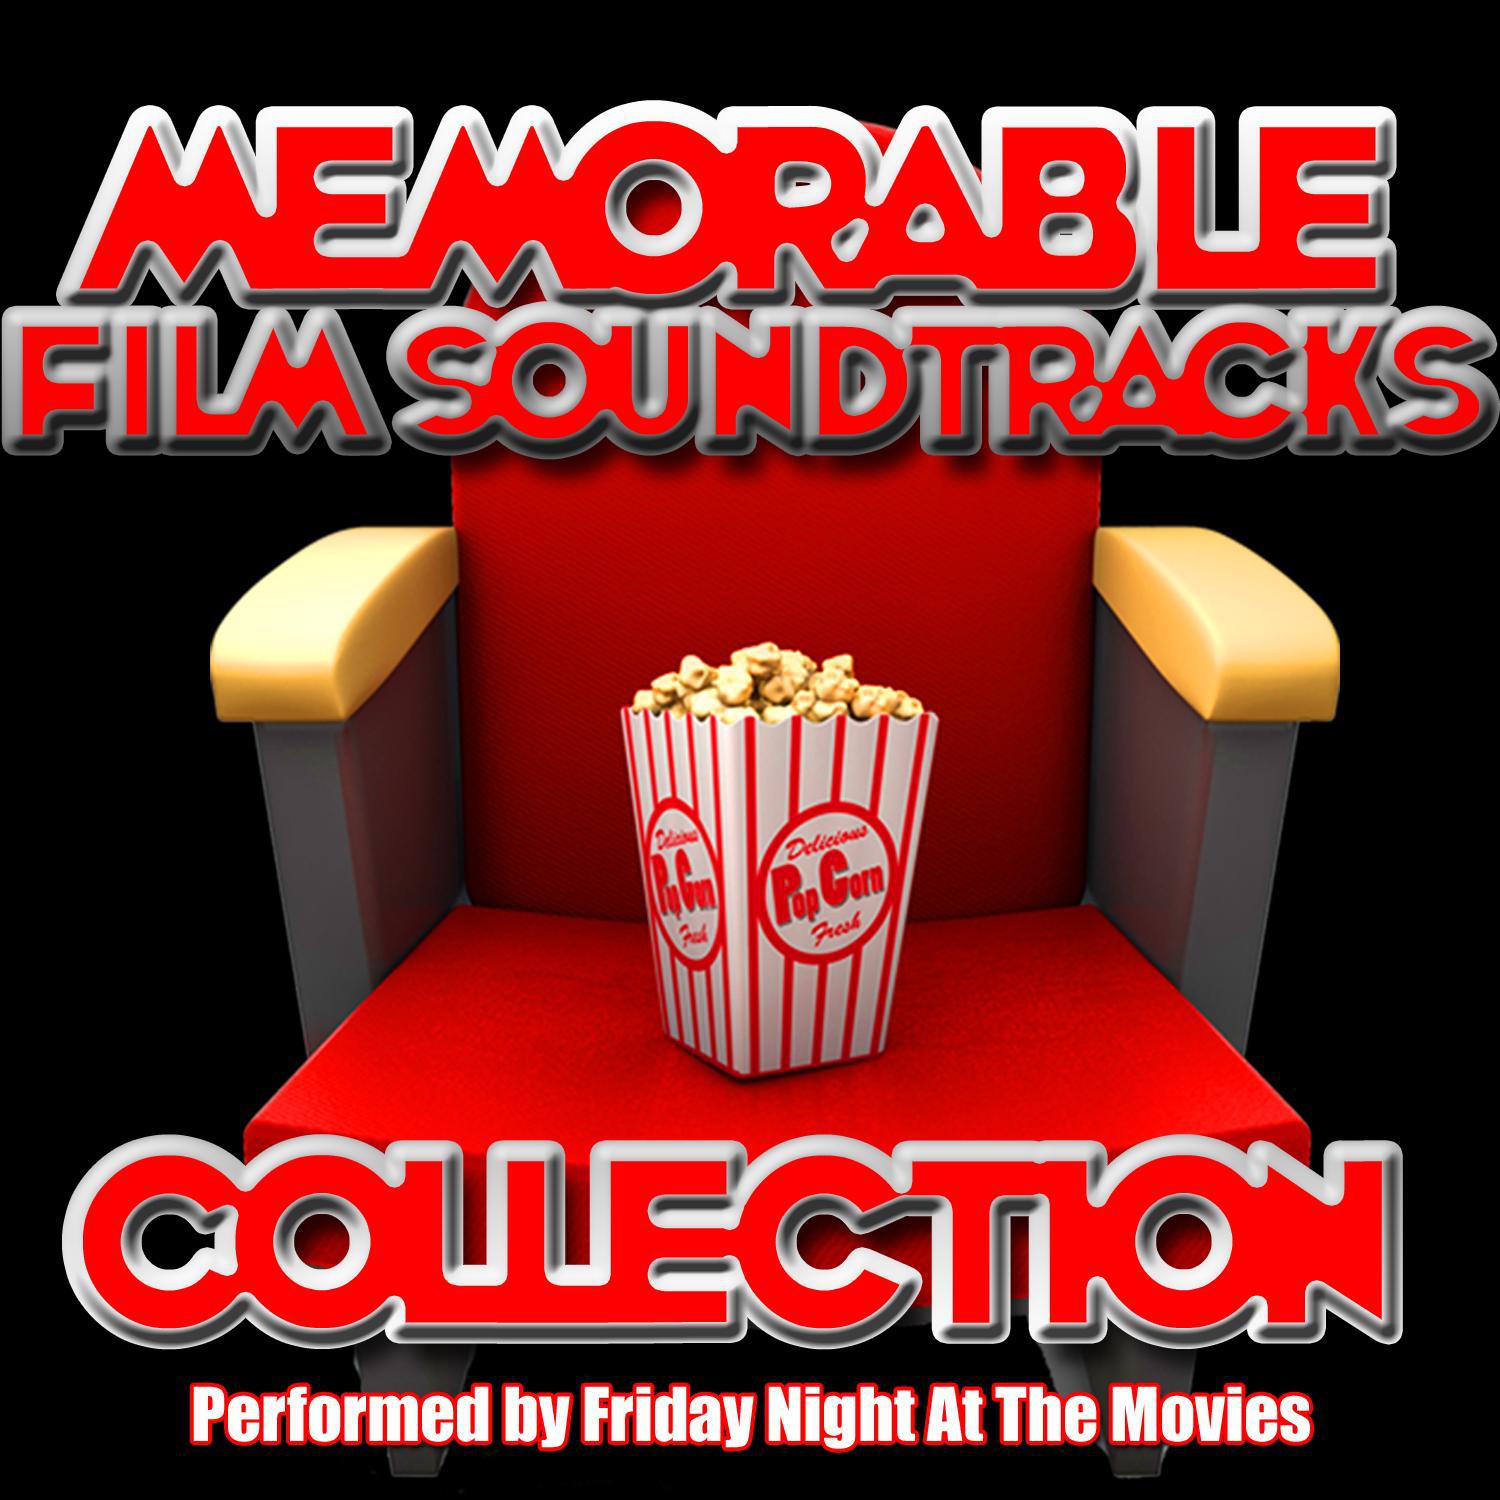 Memorable Film Soundtracks Collection